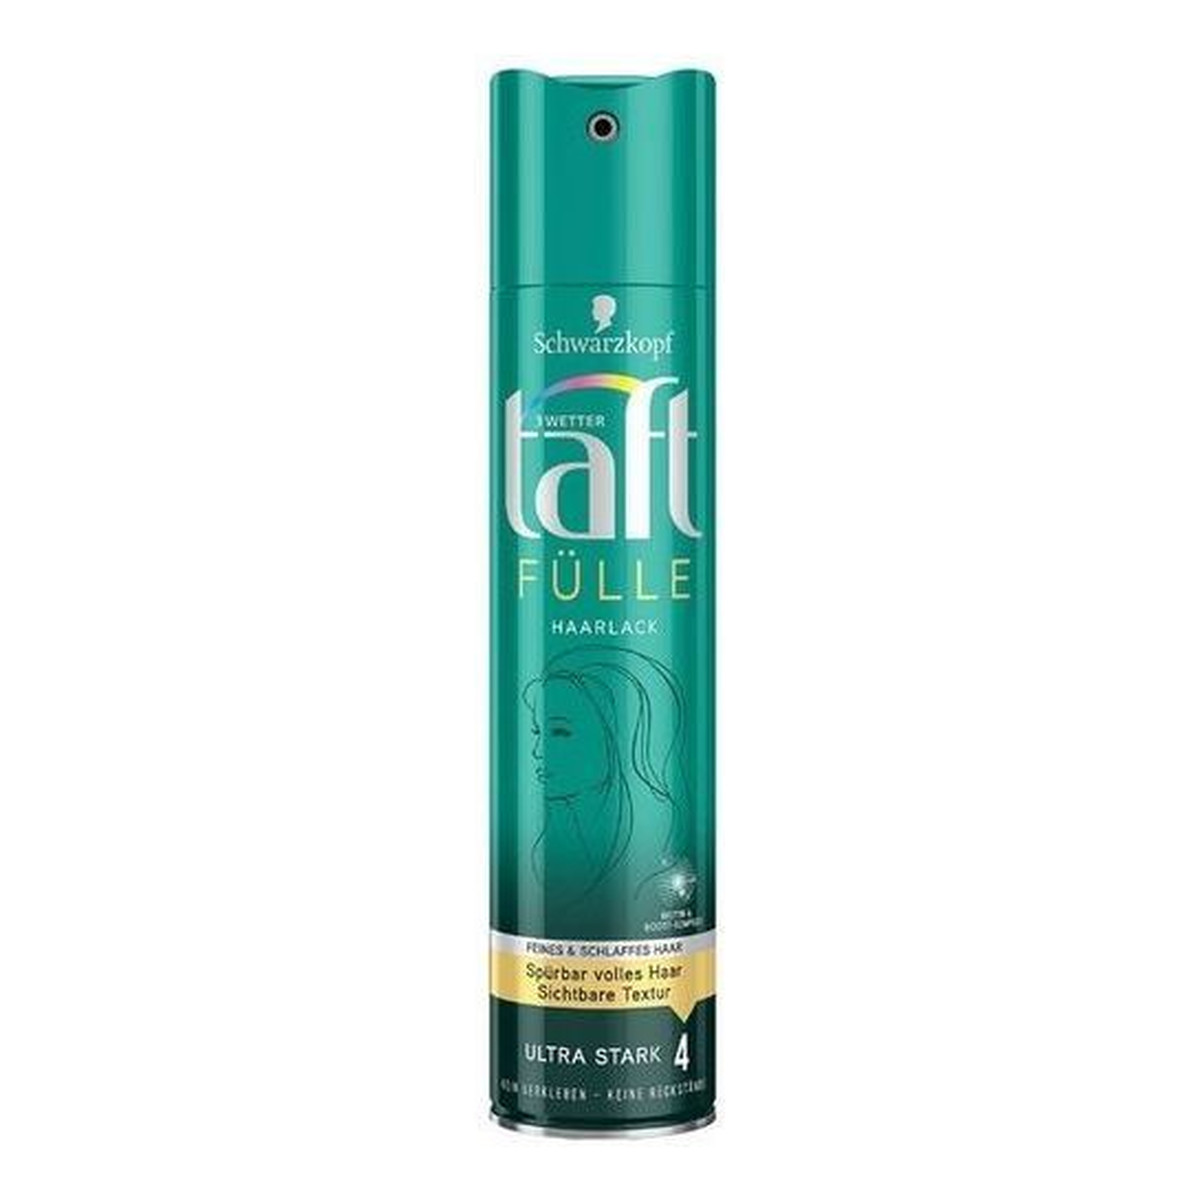 Taft Fulle 4 Lakier do włosów 250ml